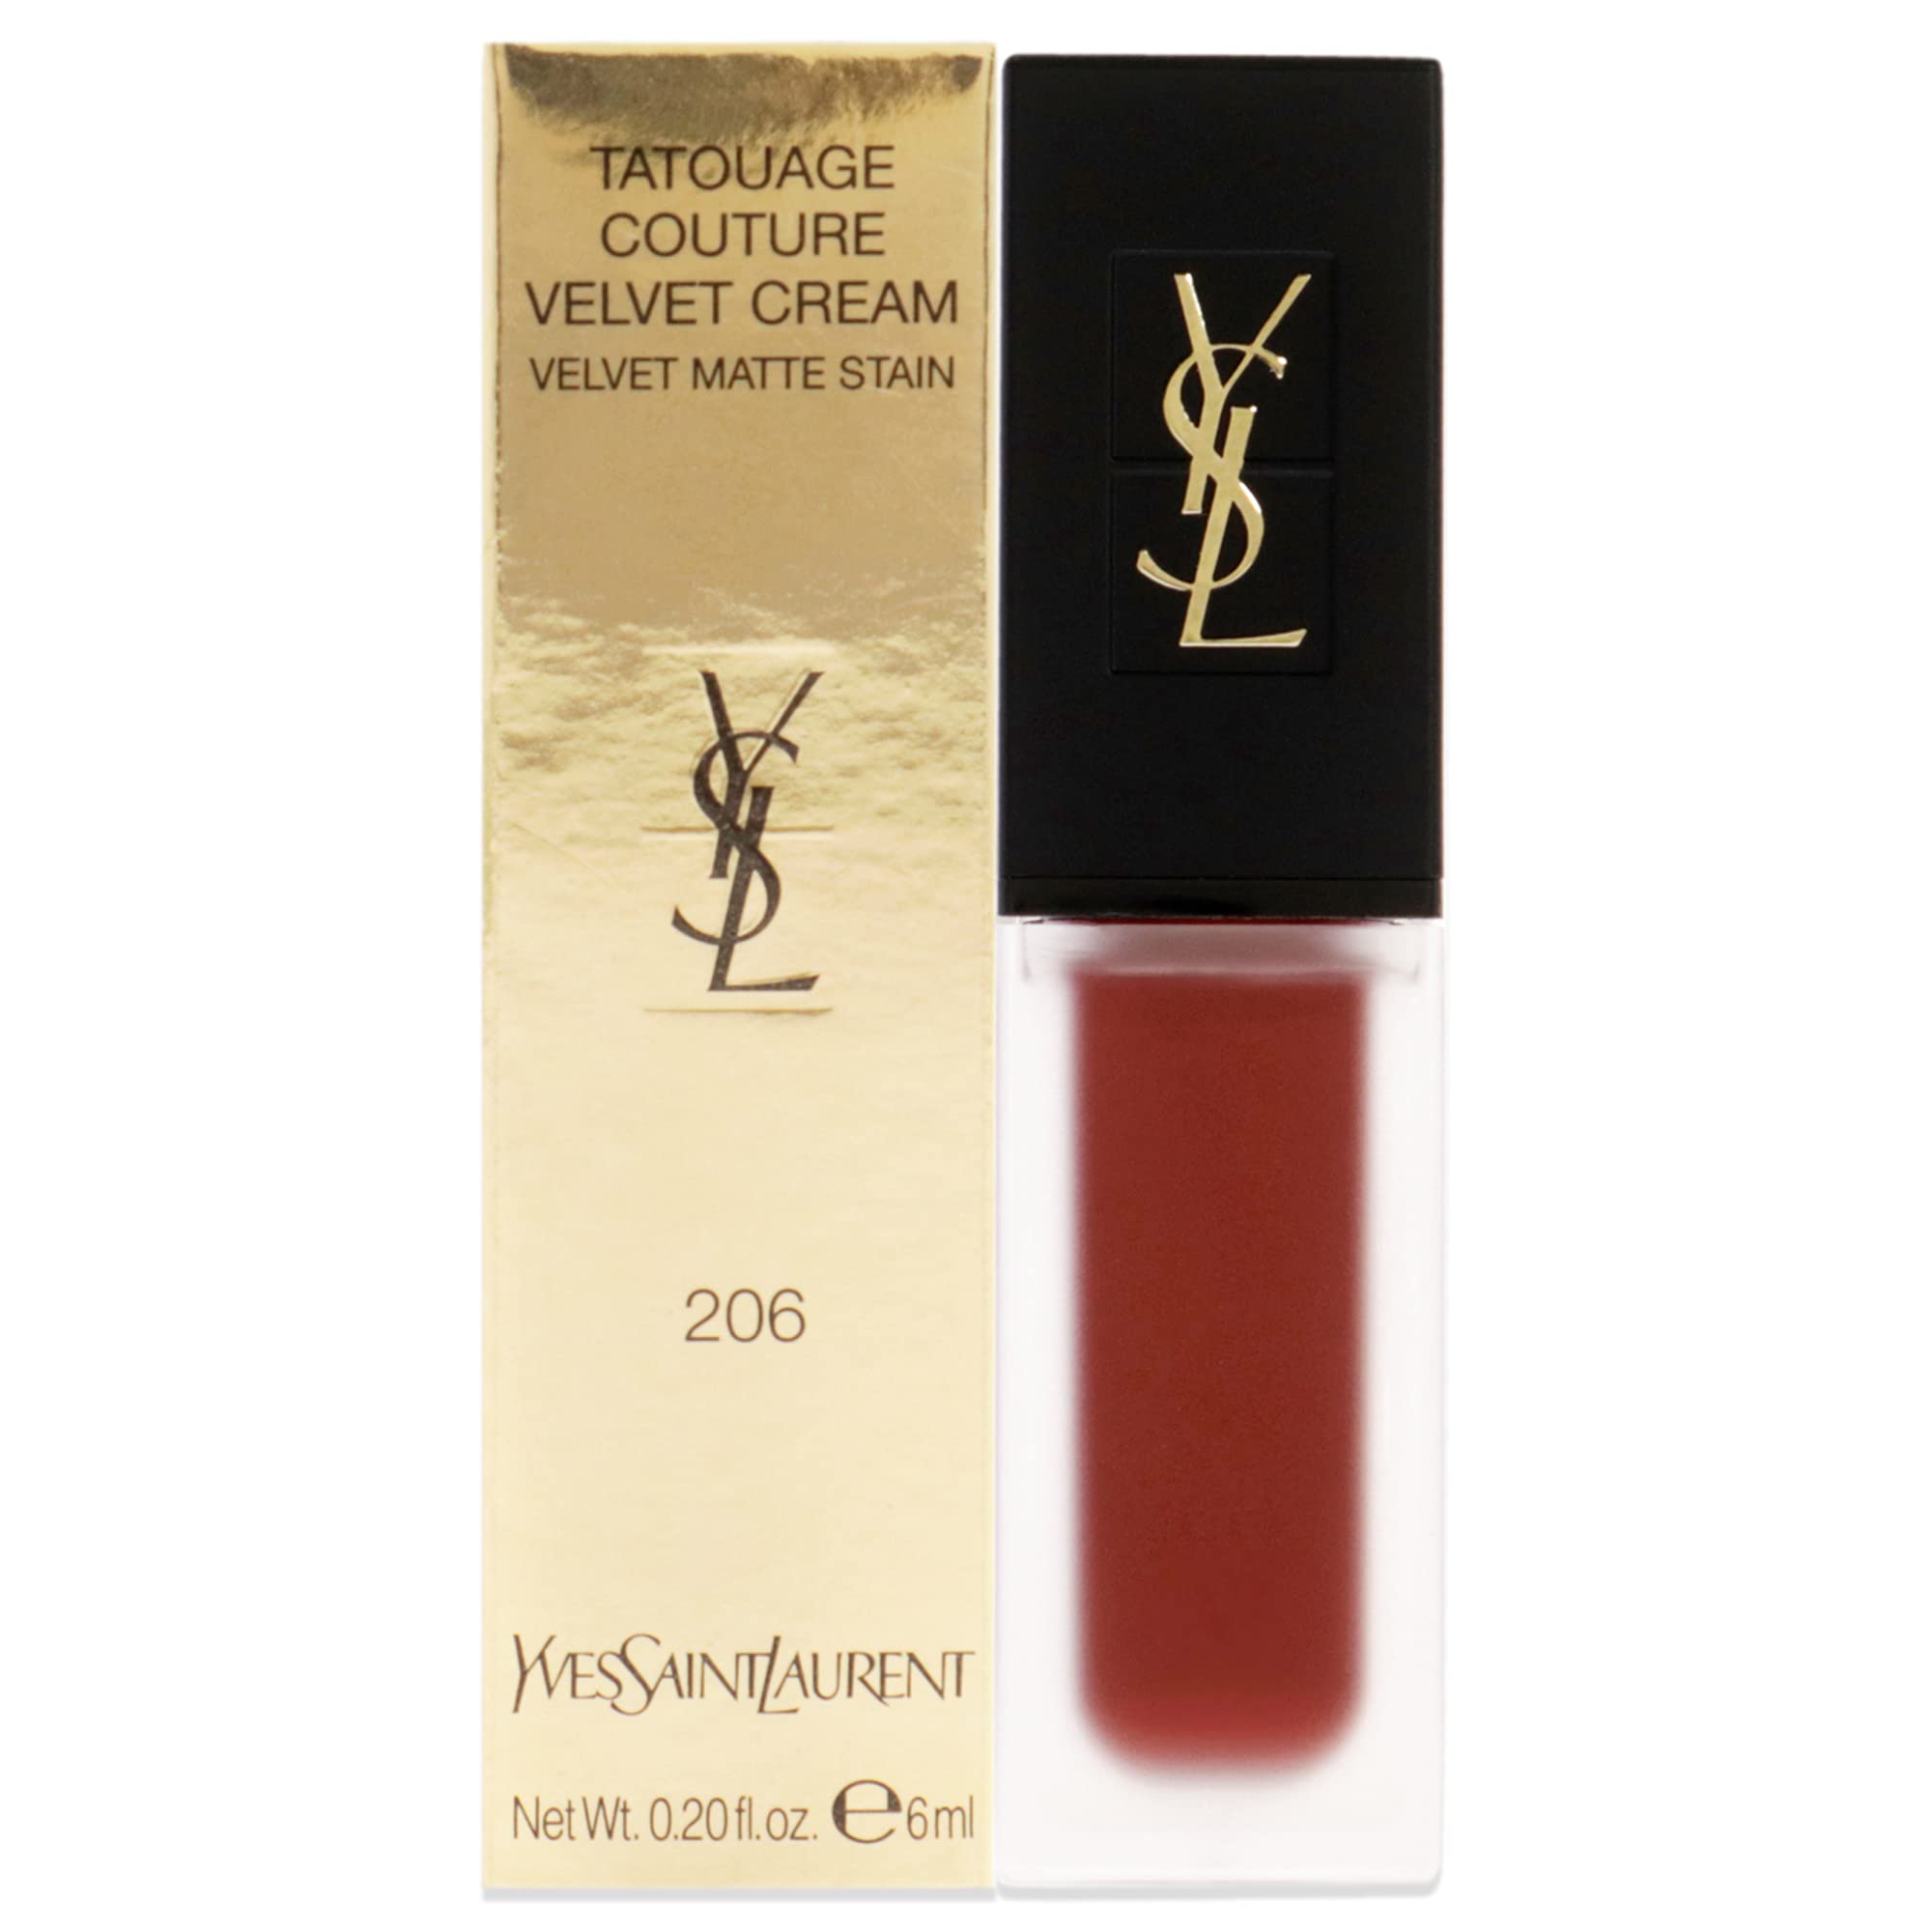 Yves Saint Laurent Tatouage Couture Velvet Cream 206 - Club Bordeaux, 6 ml.